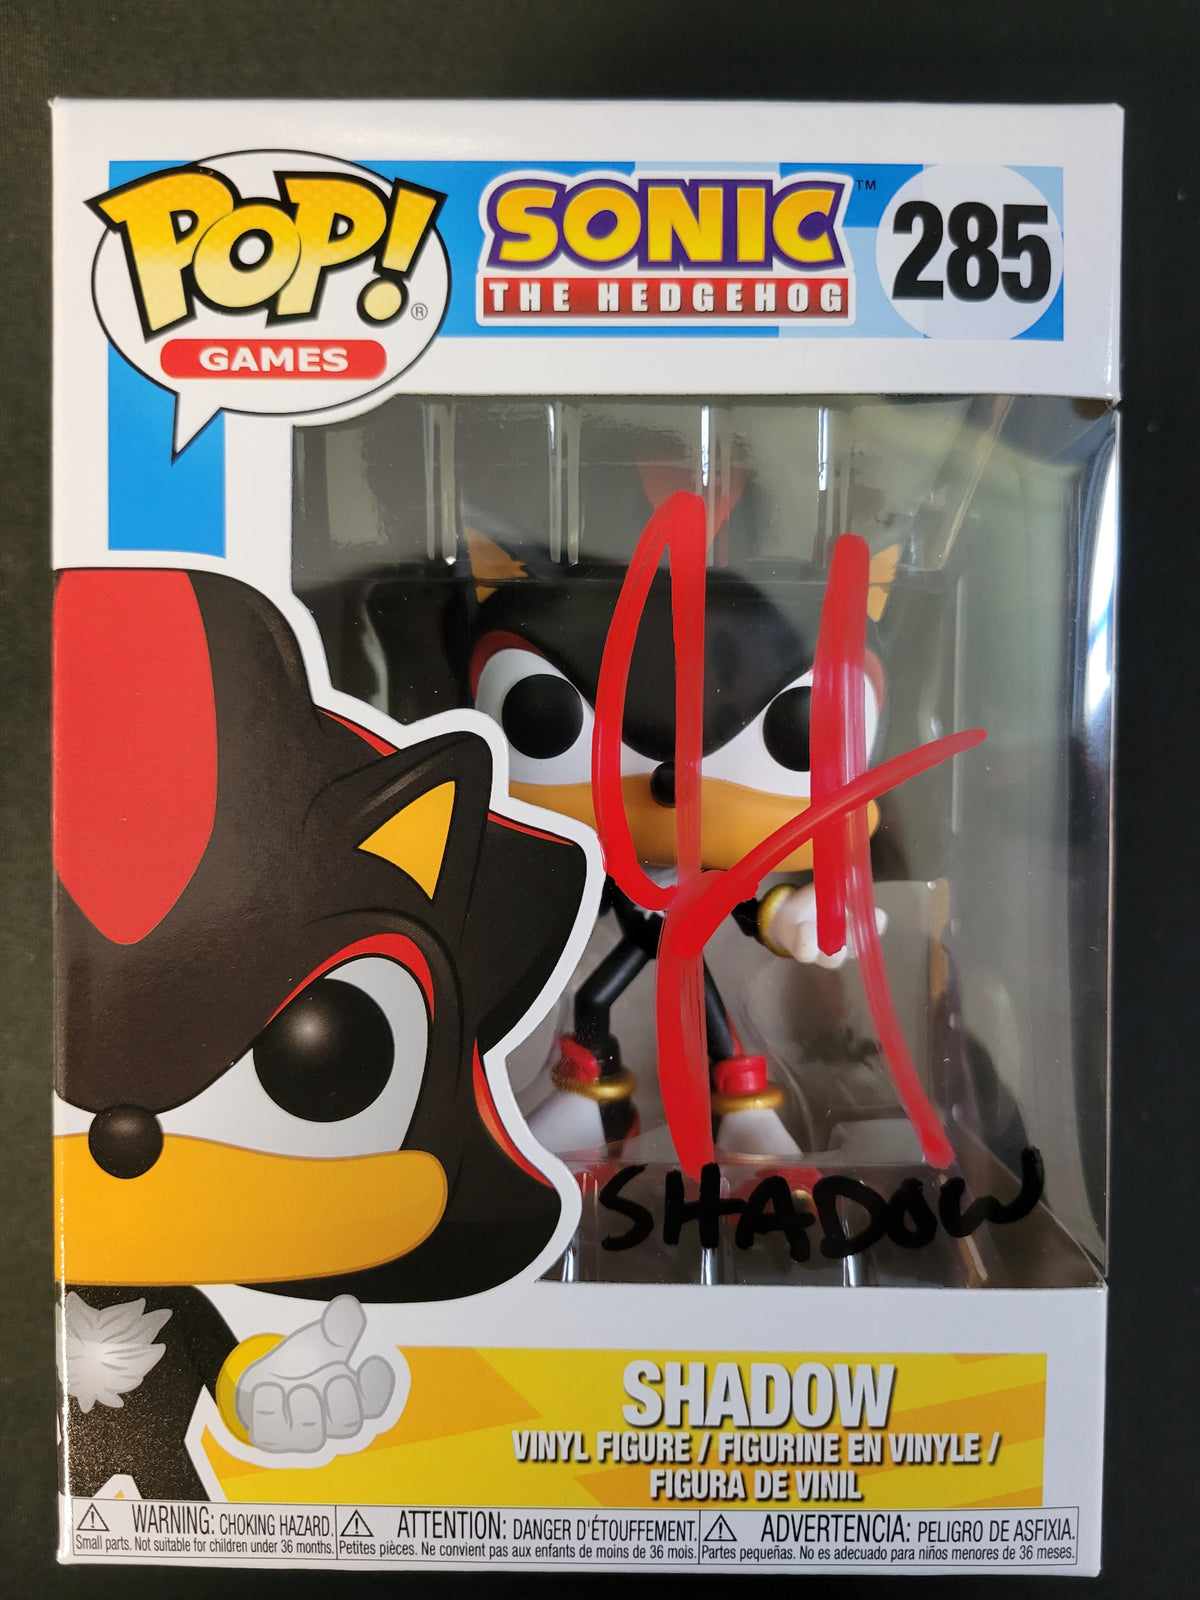 Funko Pop: Shadow The Hedgehog #285 Autographed by Jason Griffith - Cert 703